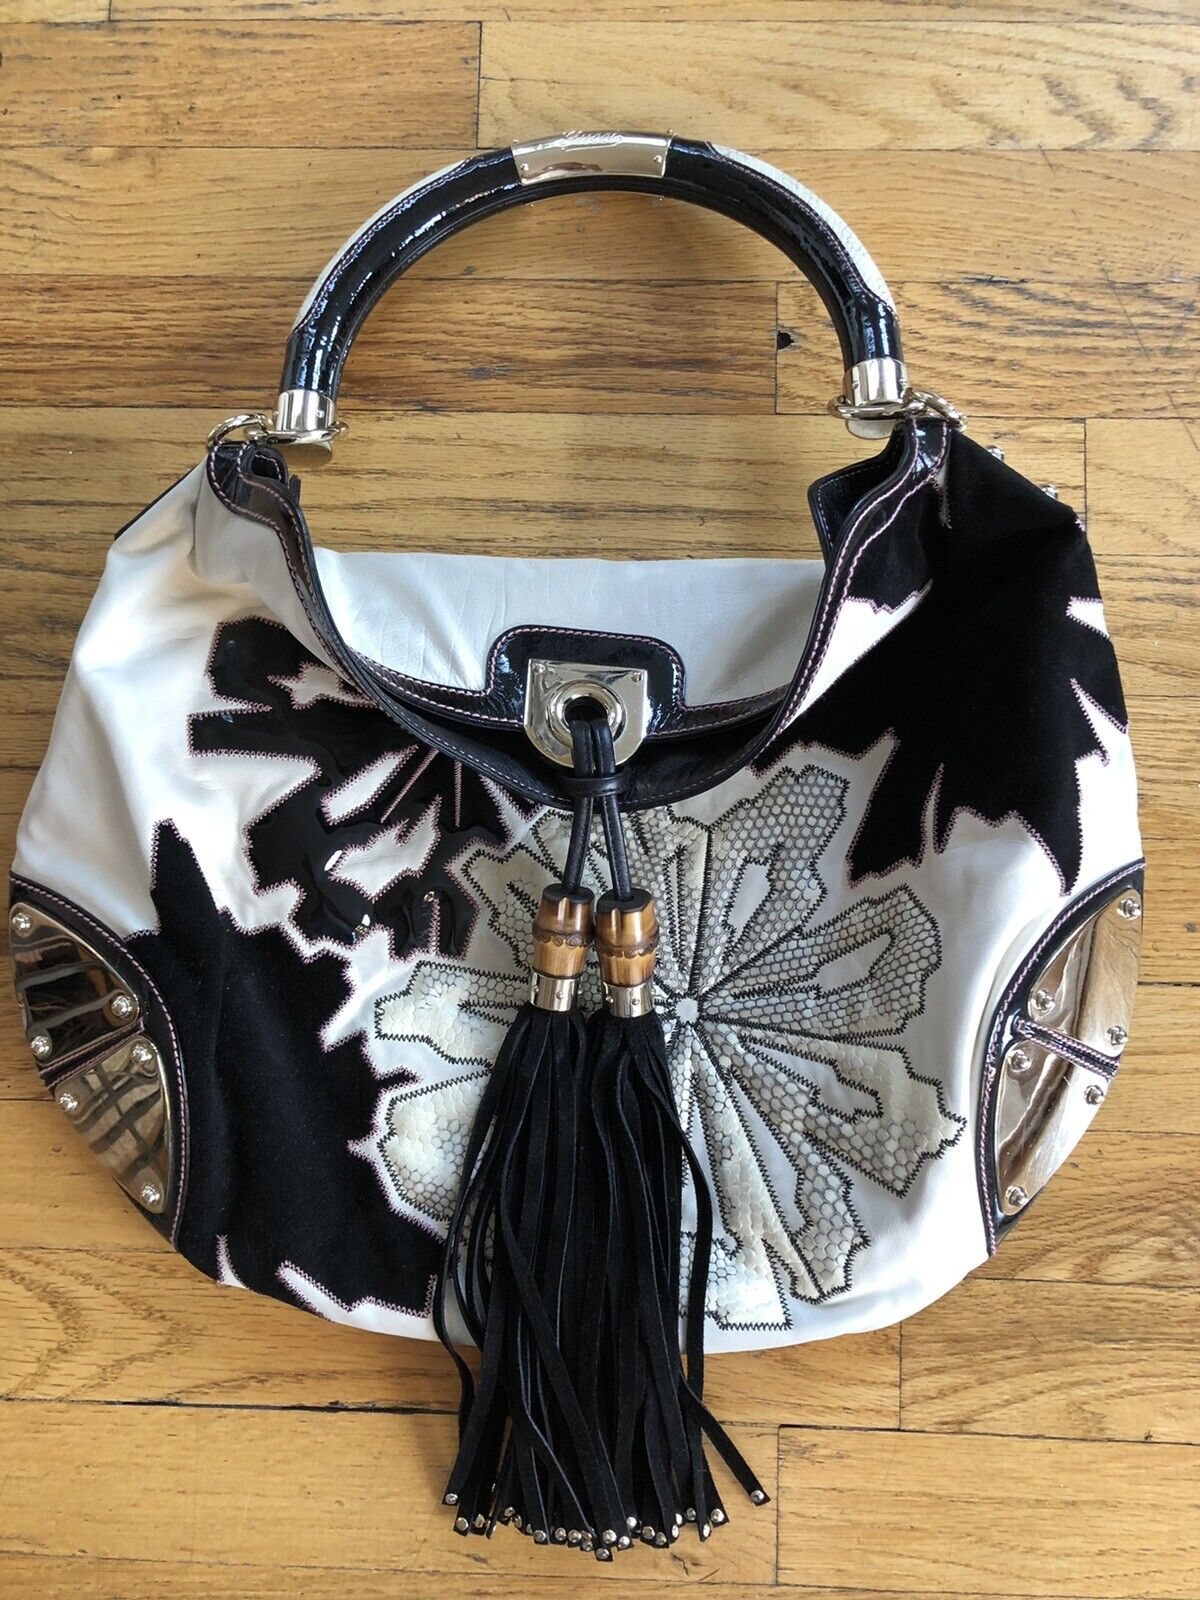 Gucci Indy Baboushka Black White Leather Handbag Bag Satchel Purse